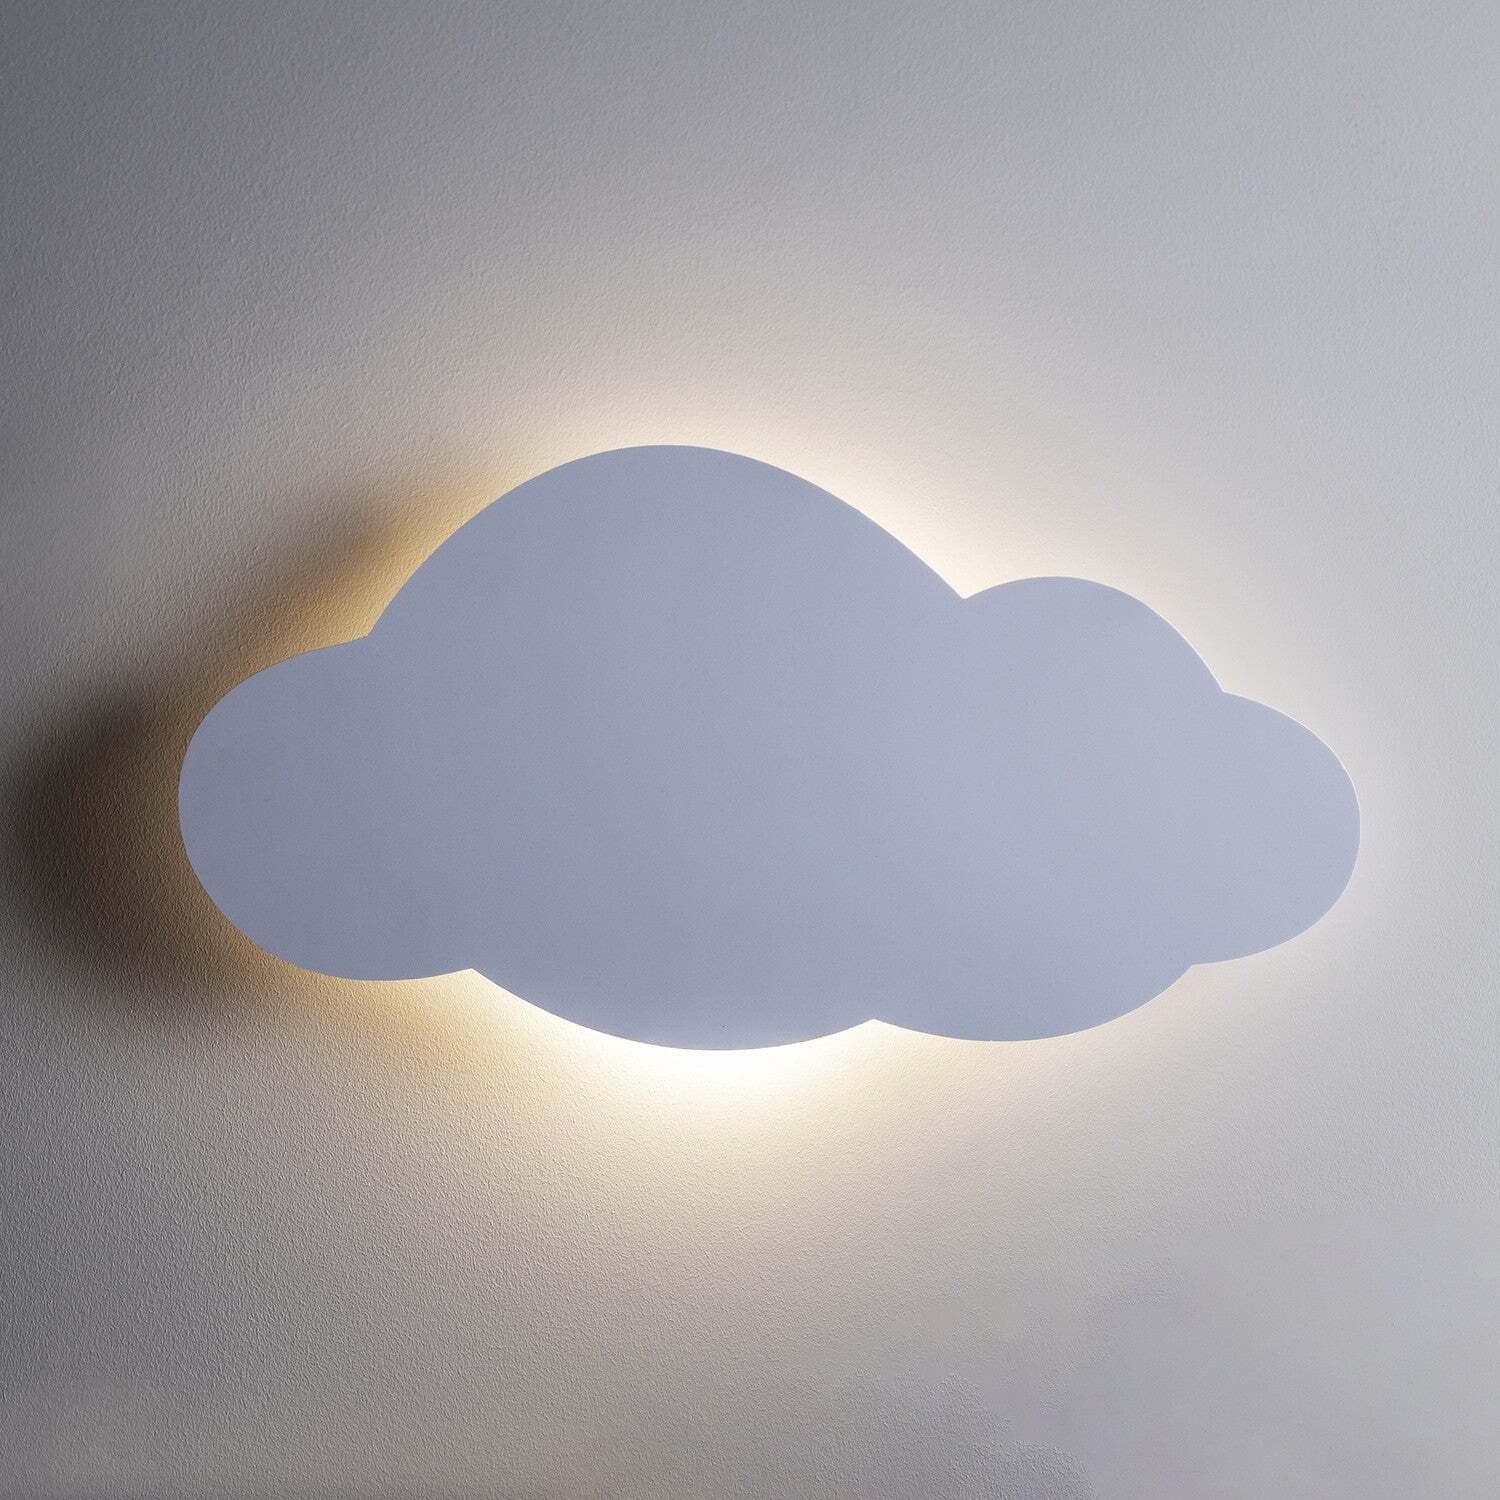 Cloud Silhouette Battery Night Light - image 1